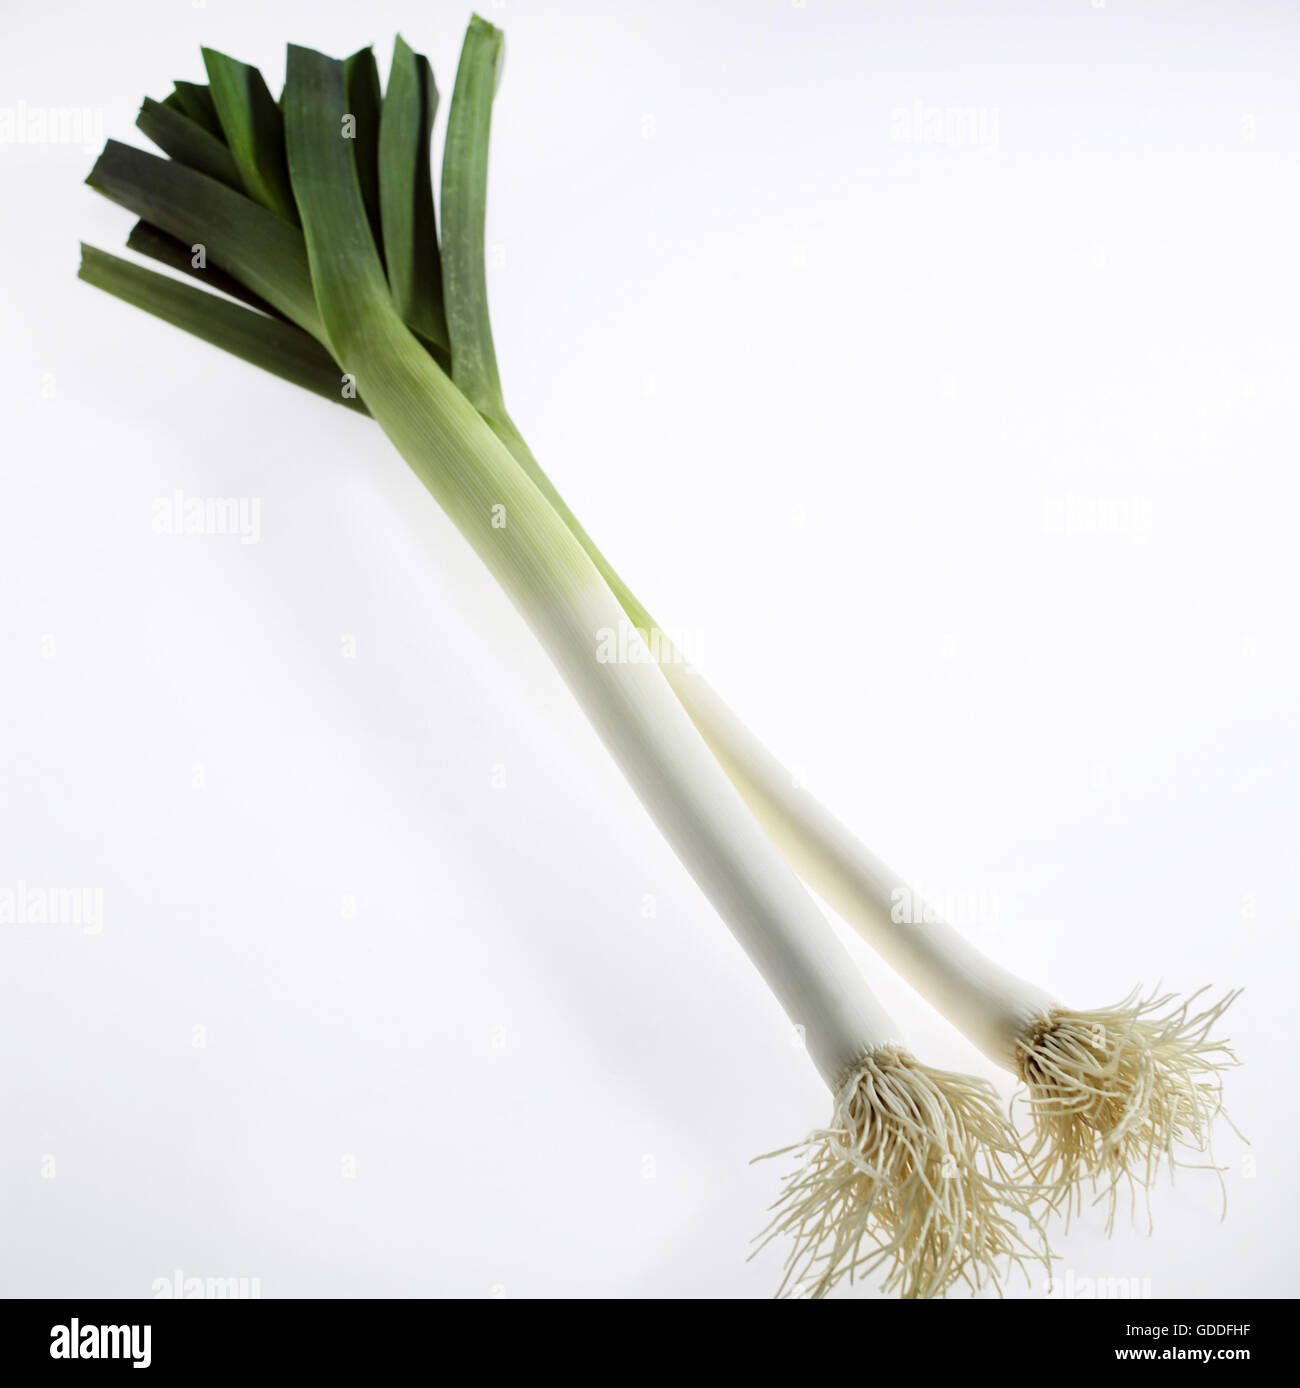 Leek, allium porrum, Vegetables against White Background Stock Photo